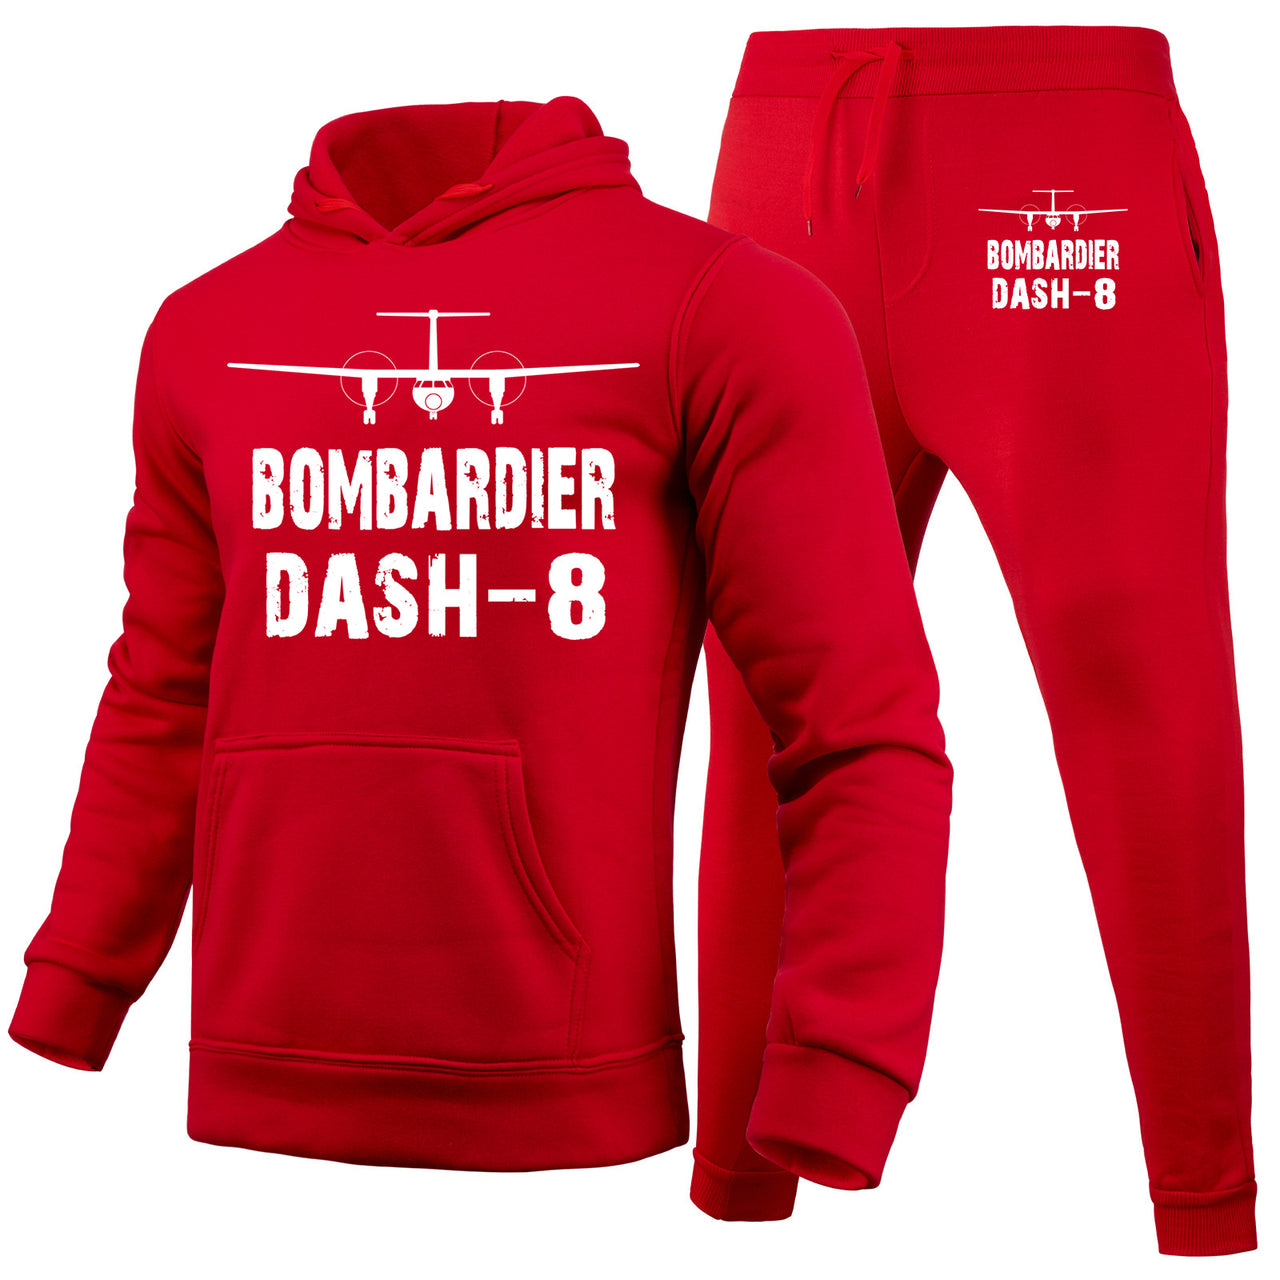 Bombardier Dash-8 & Plane Designed Hoodies & Sweatpants Set